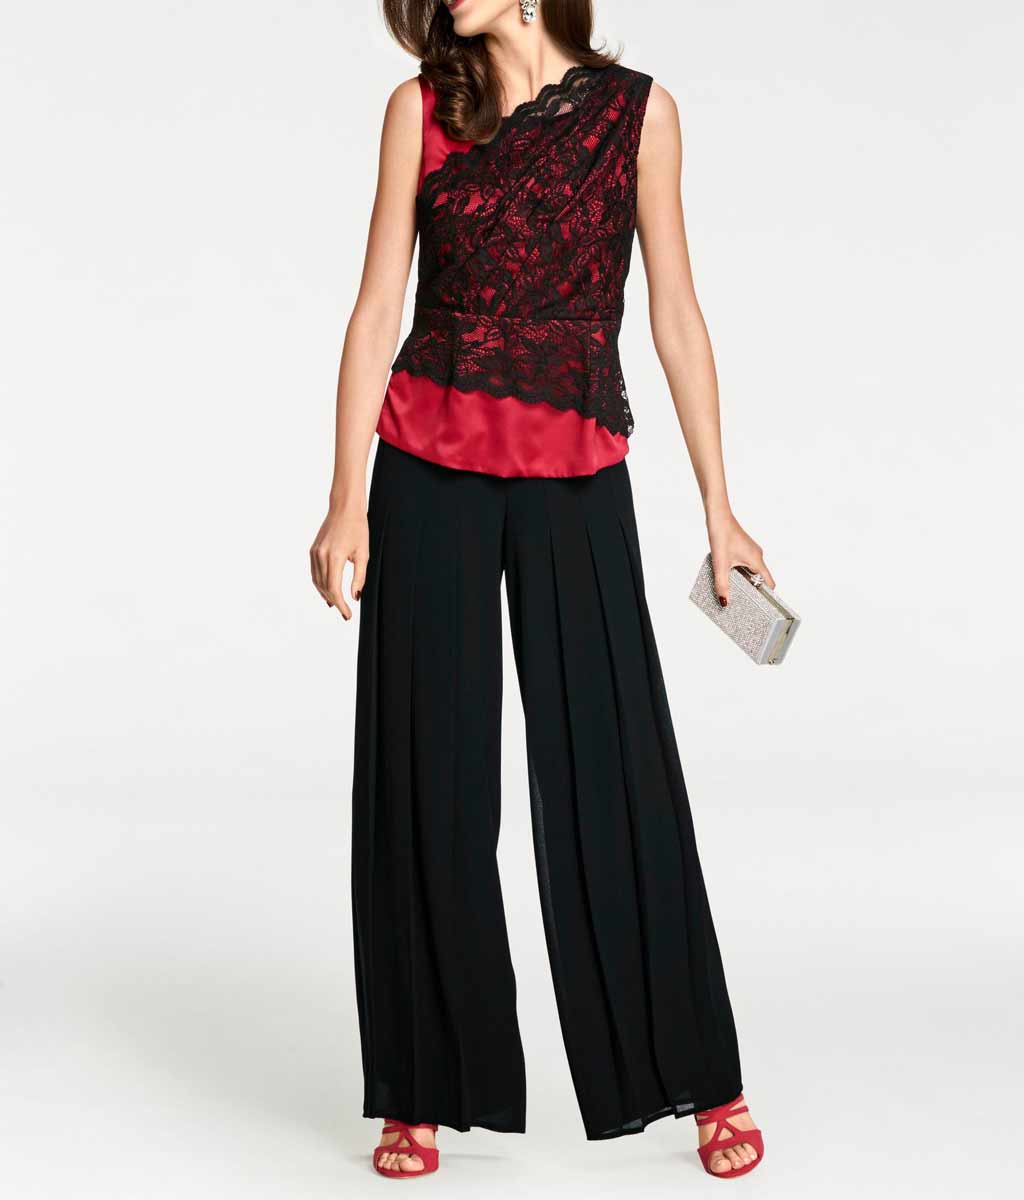 Ashley Brooke Damen Designer-Satin-Spitzenshirt, rot-schwarz